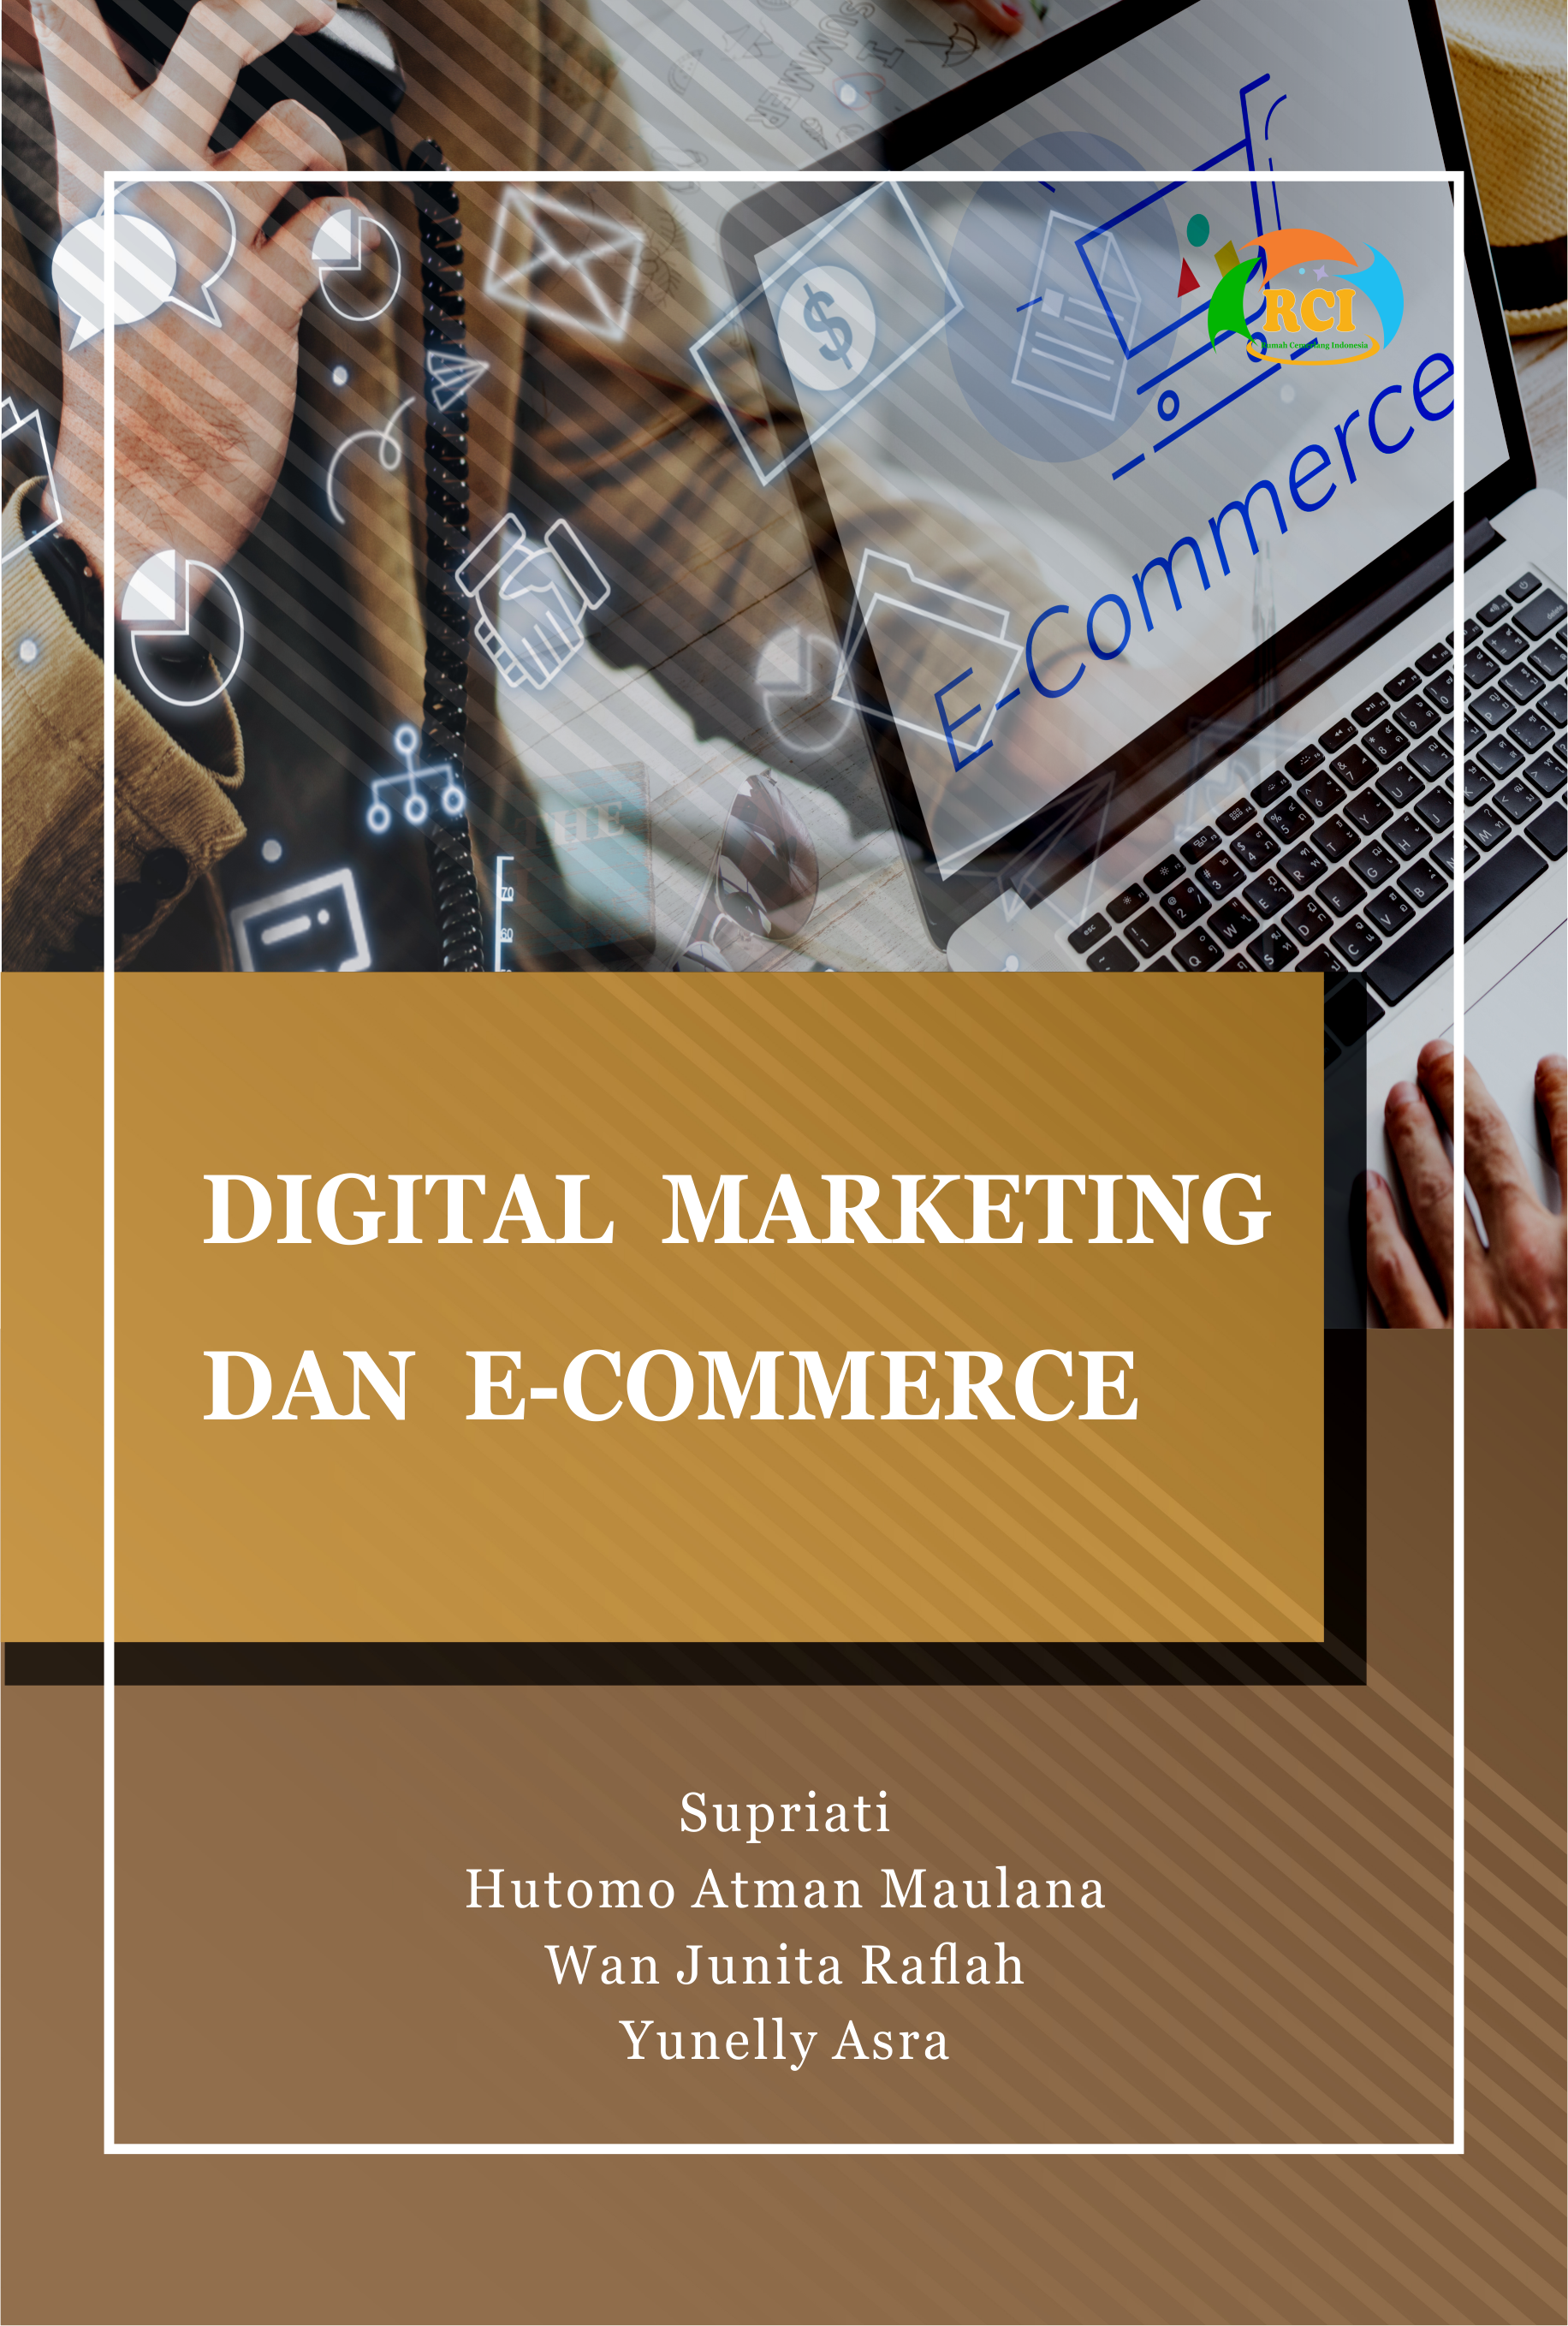 Digital marketing dan e-commerce [sumber elektronis]